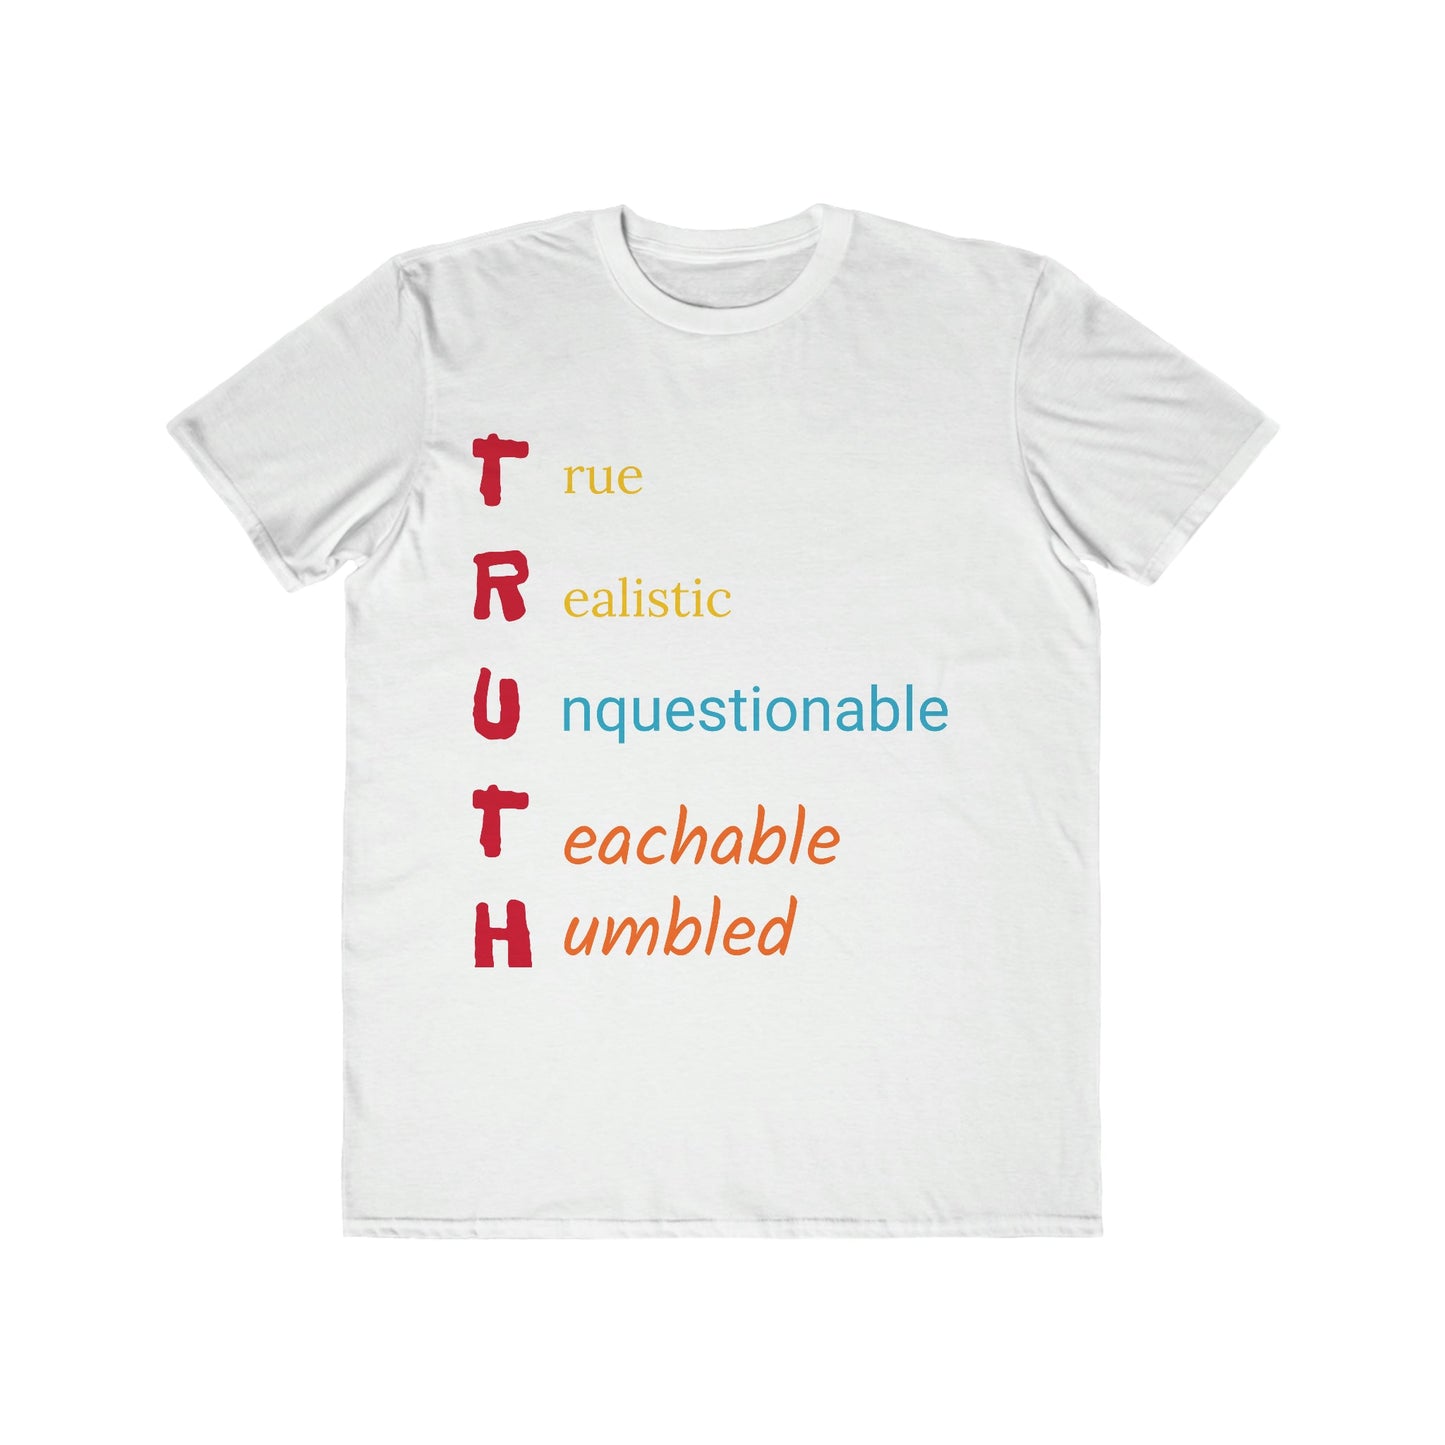 T4x Live in My Truth Men's Lightweight T-Shirt - T4x Quadruple Love